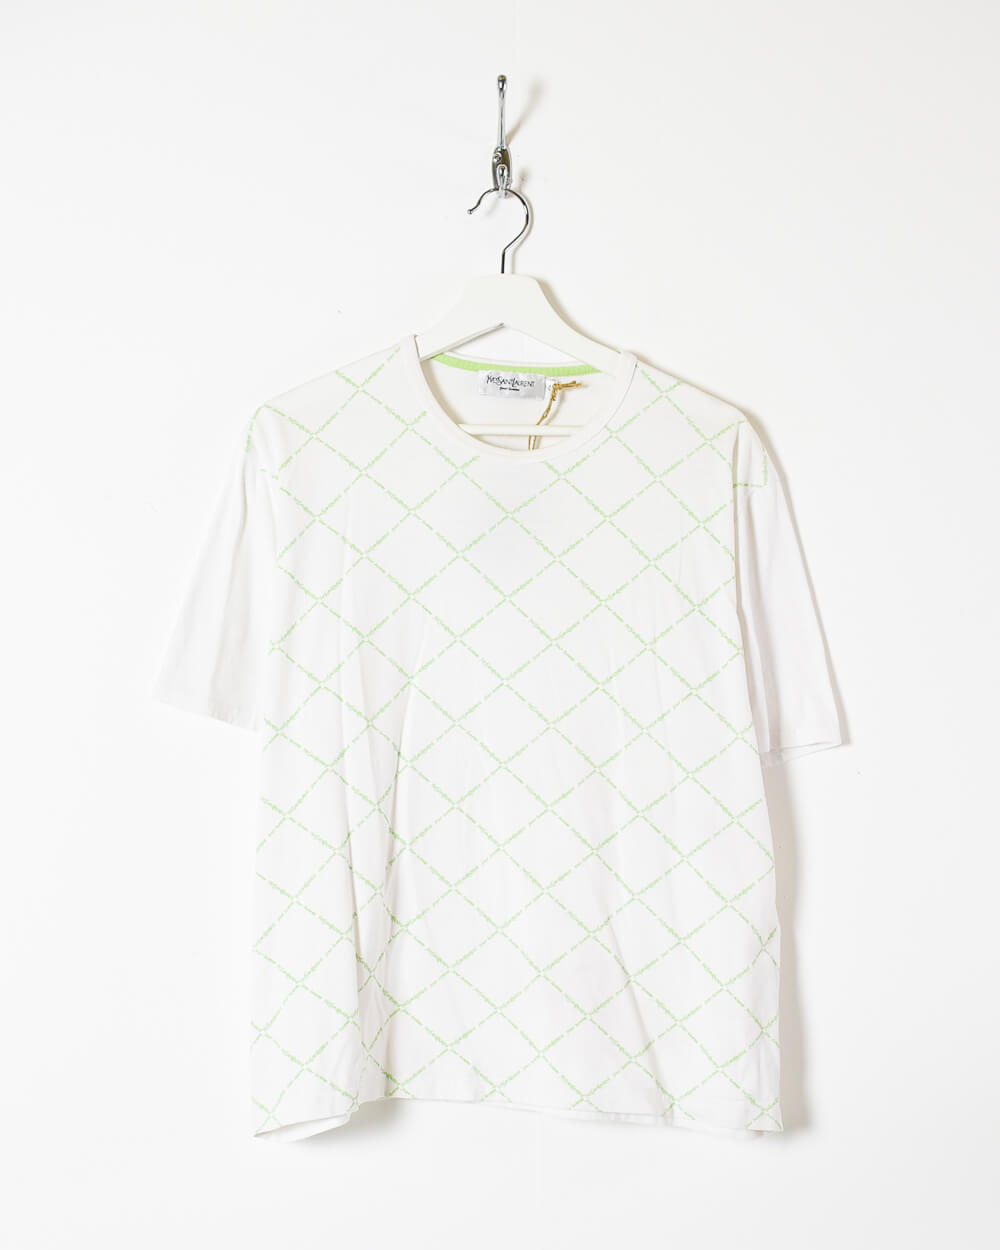 White Yves Saint Laurent T-Shirt - Medium